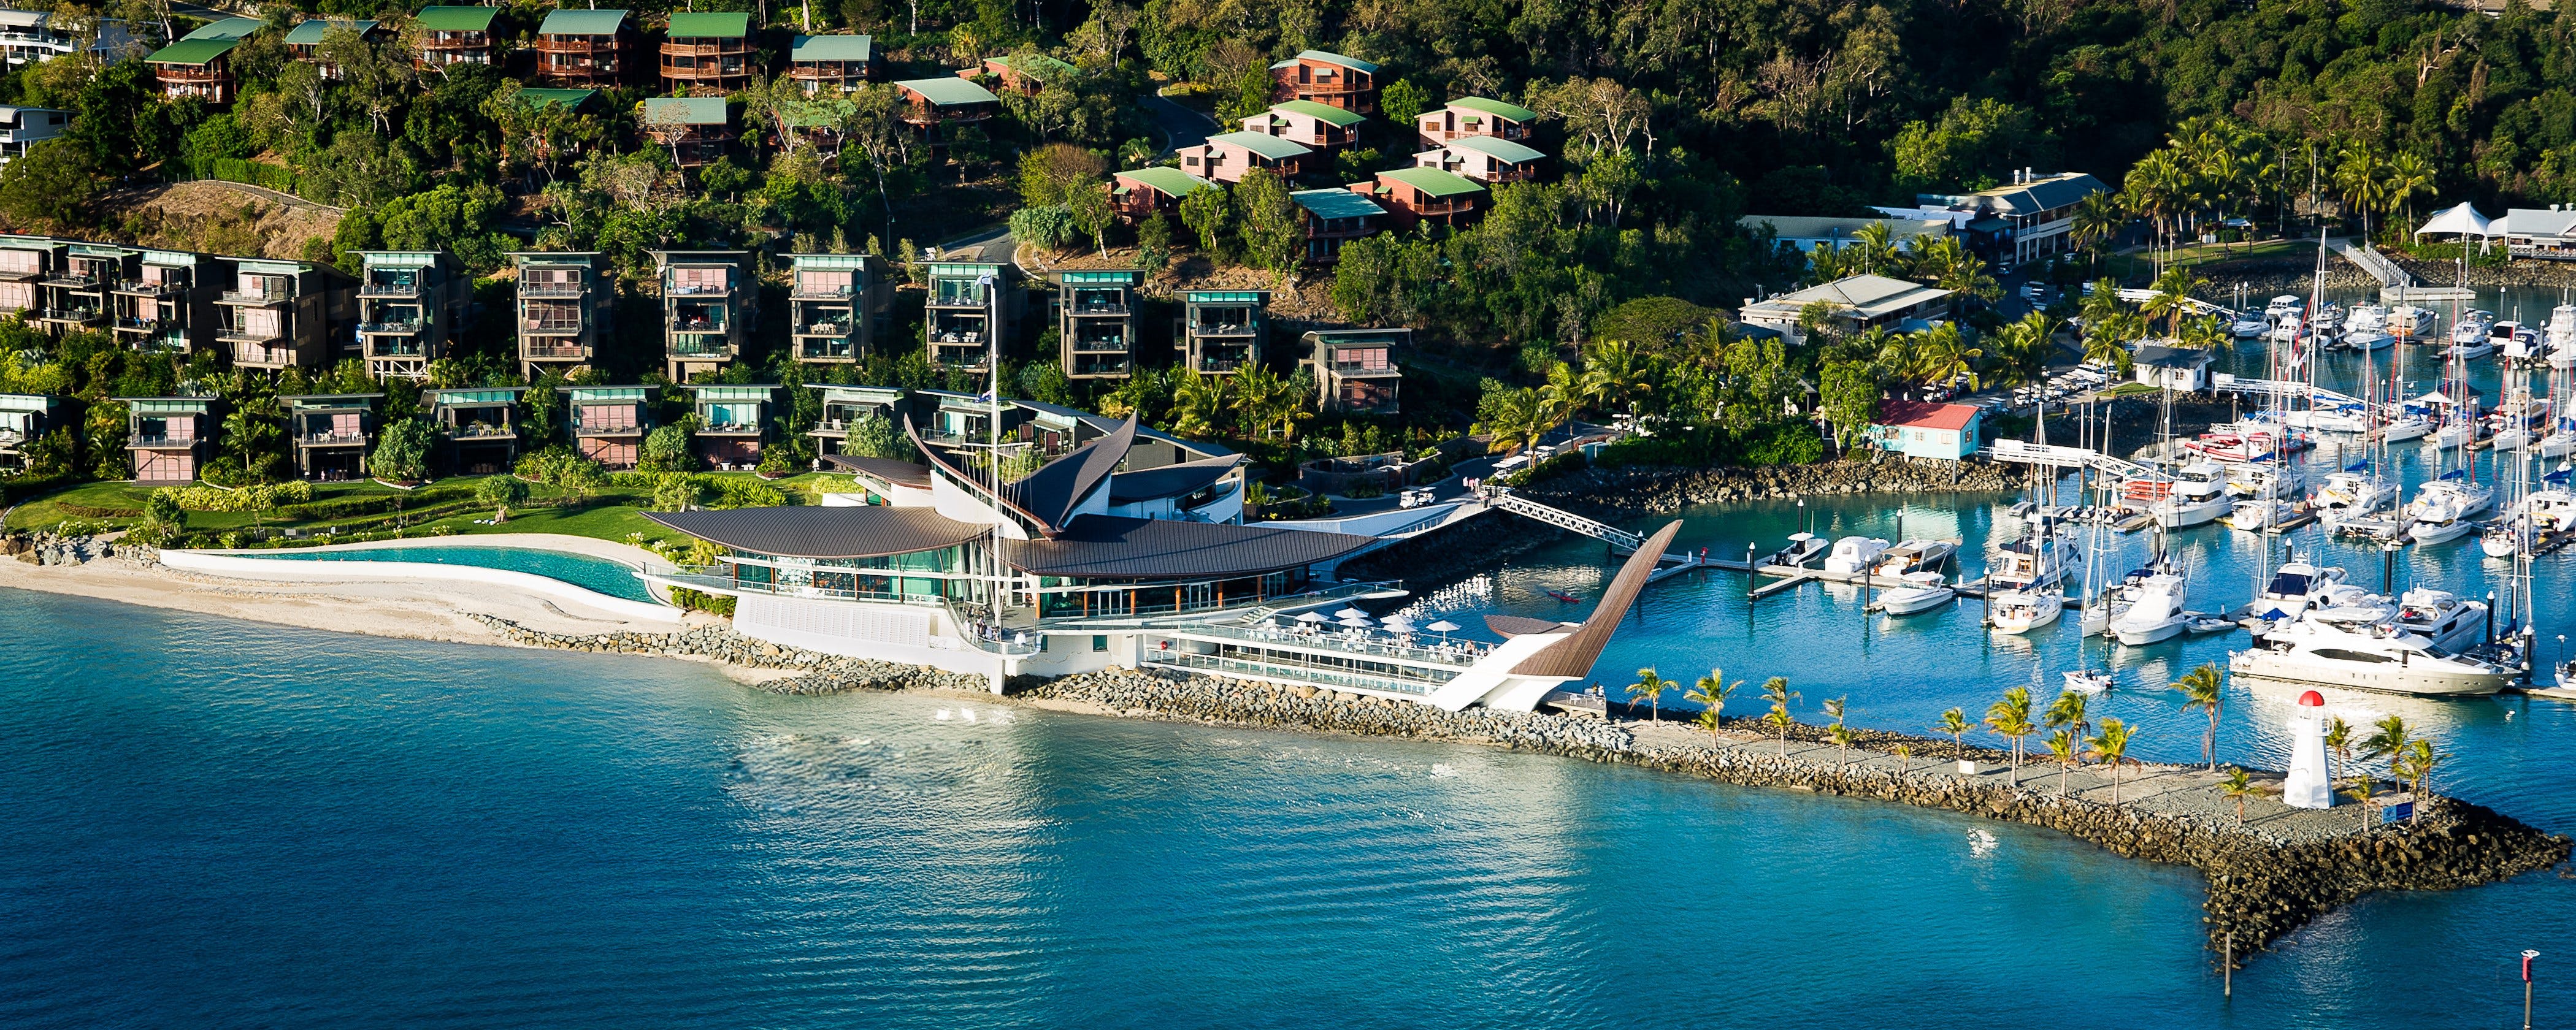 Hamilton Island Yacht Club - Accommodation in Bendigo